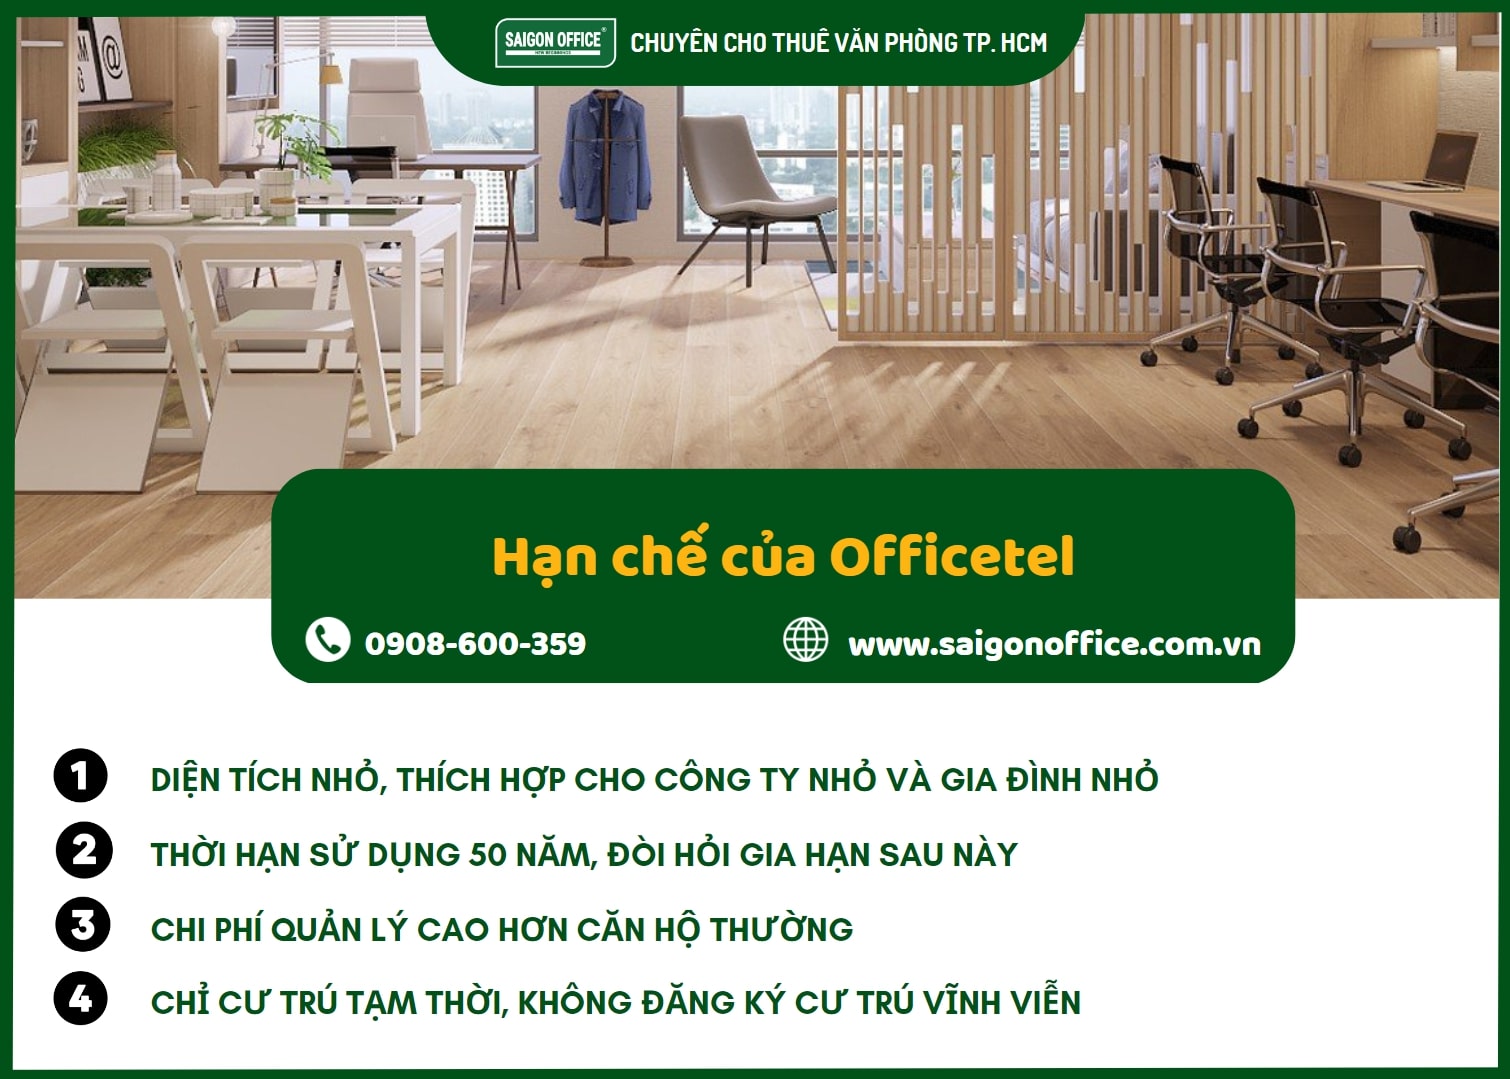 Hạn chế của Officetel